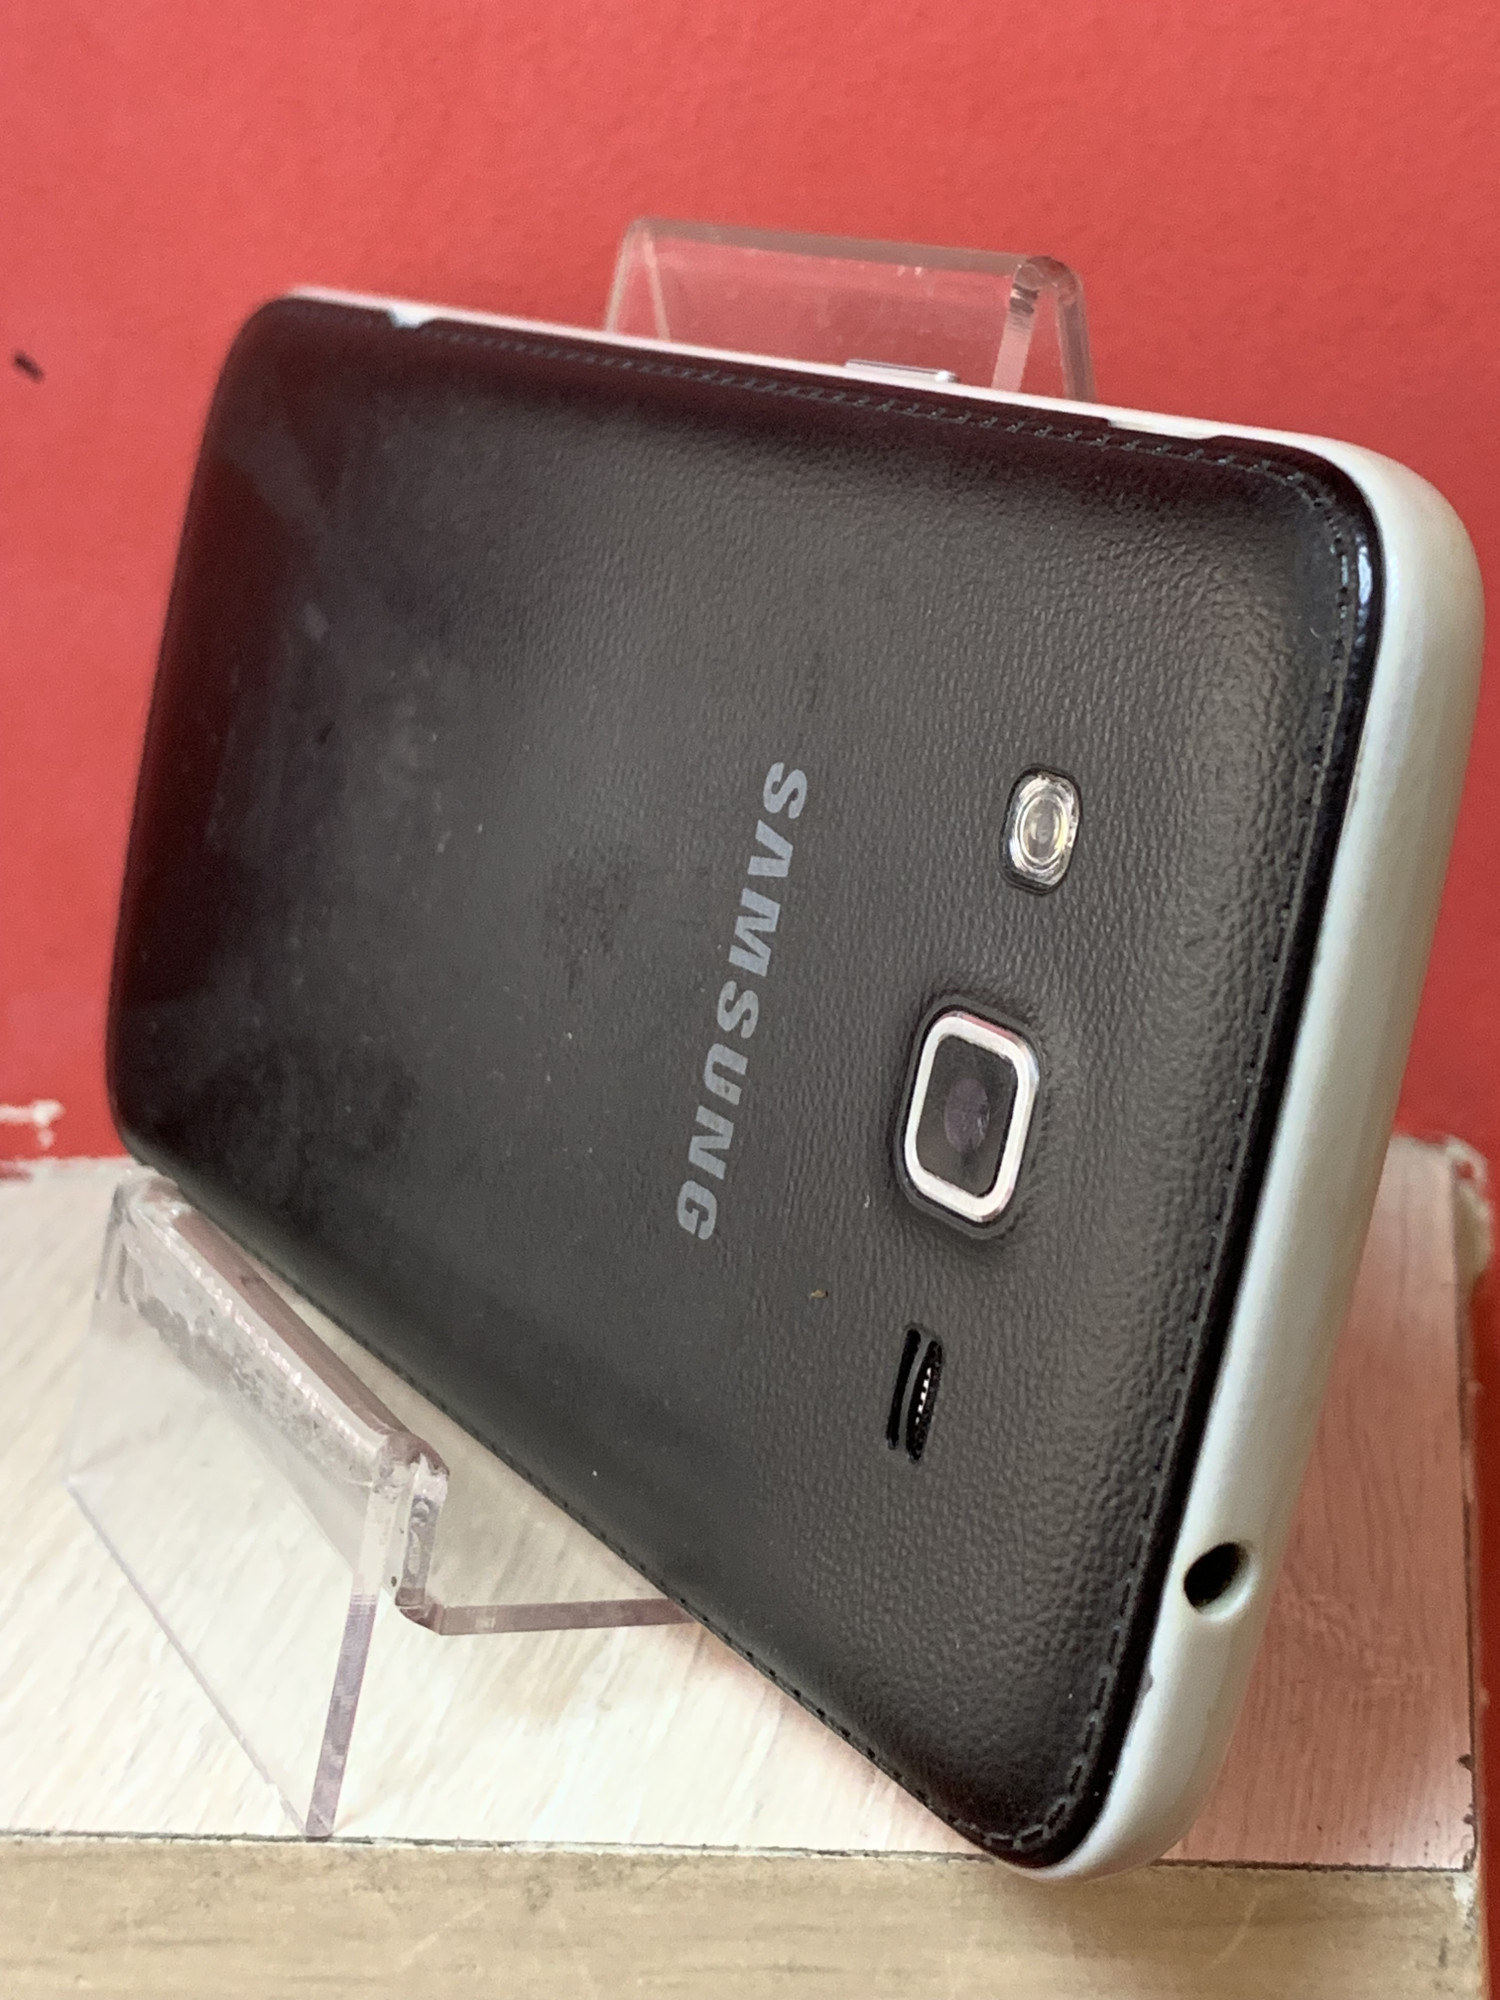 Samsung Galaxy Grand 2 (SM-G7102) 1/8Gb Black 3